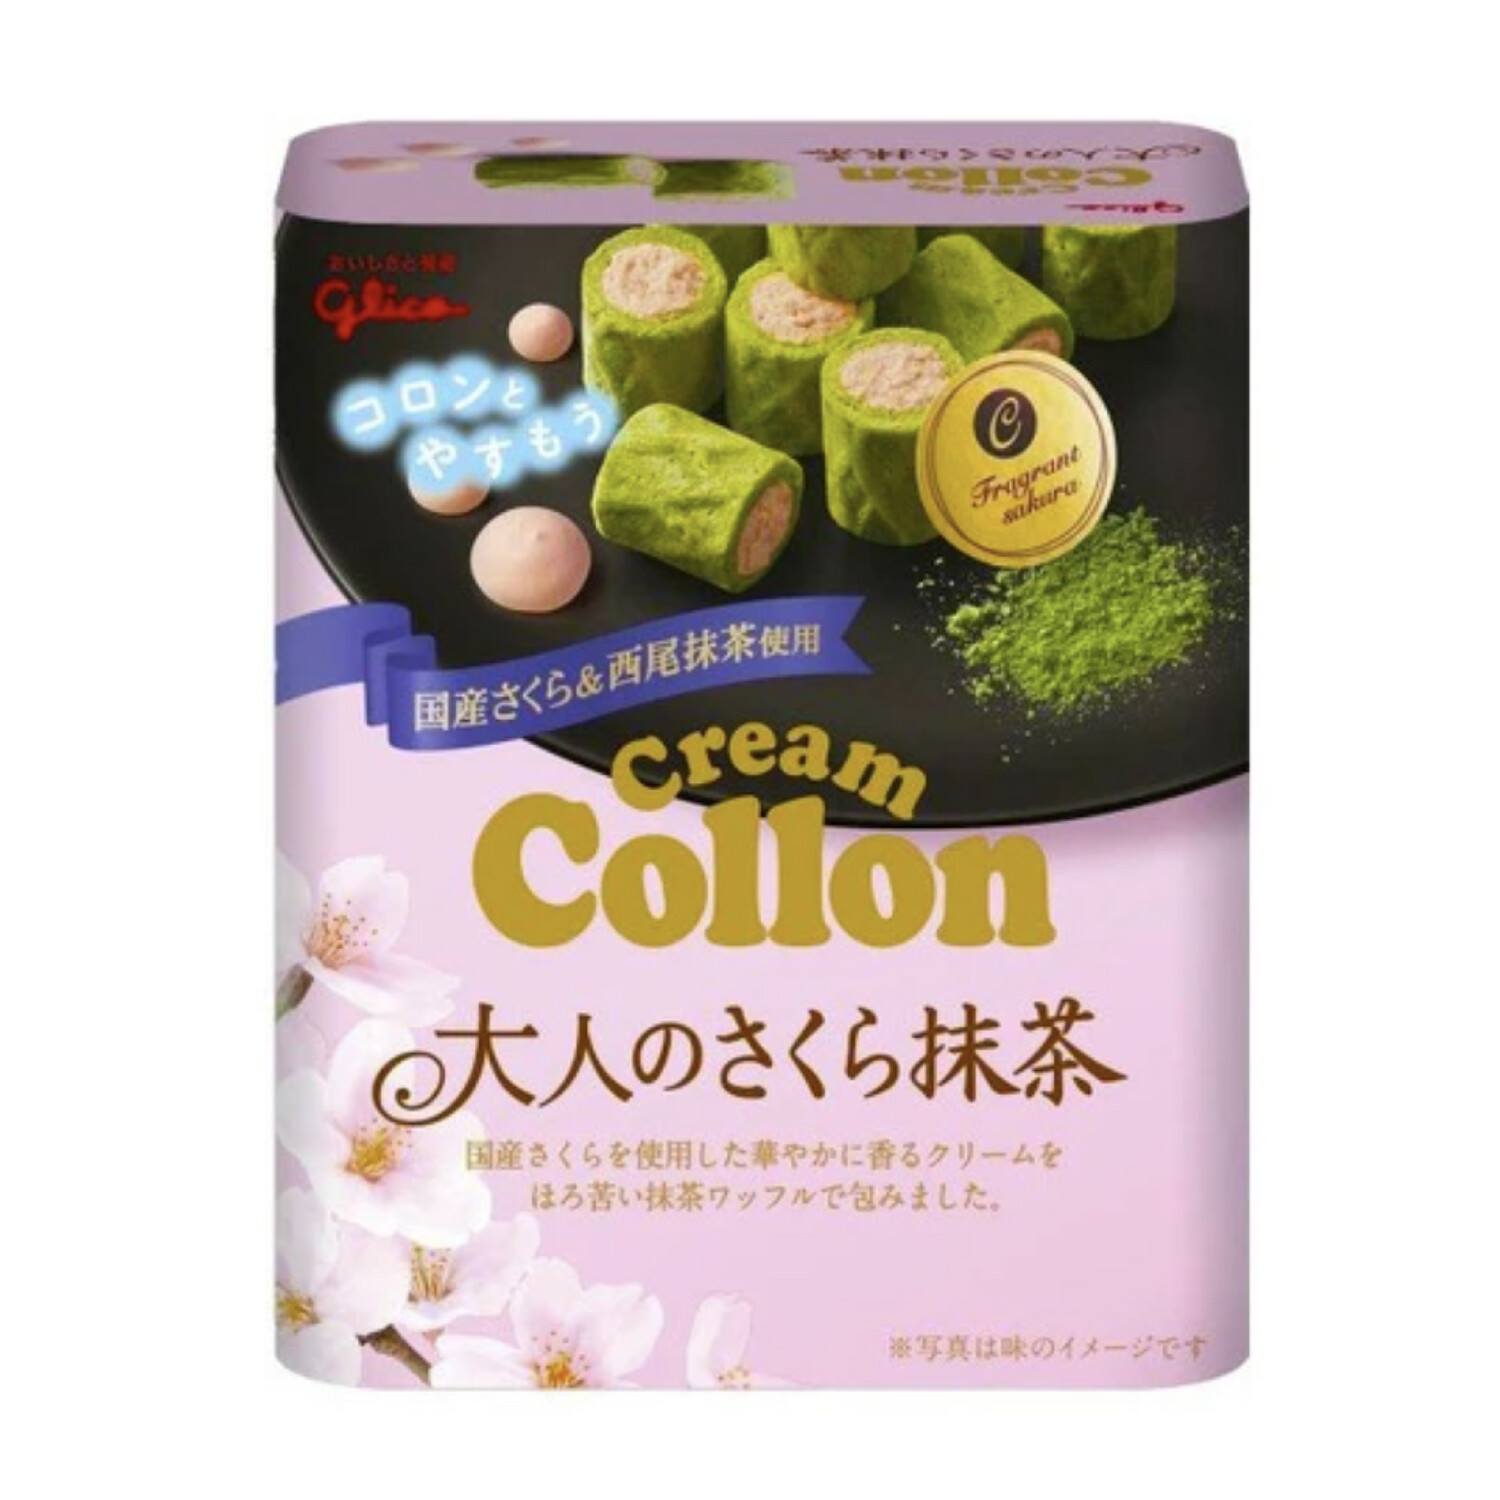 Glico Cream Collon Sakura Matcha (48G)